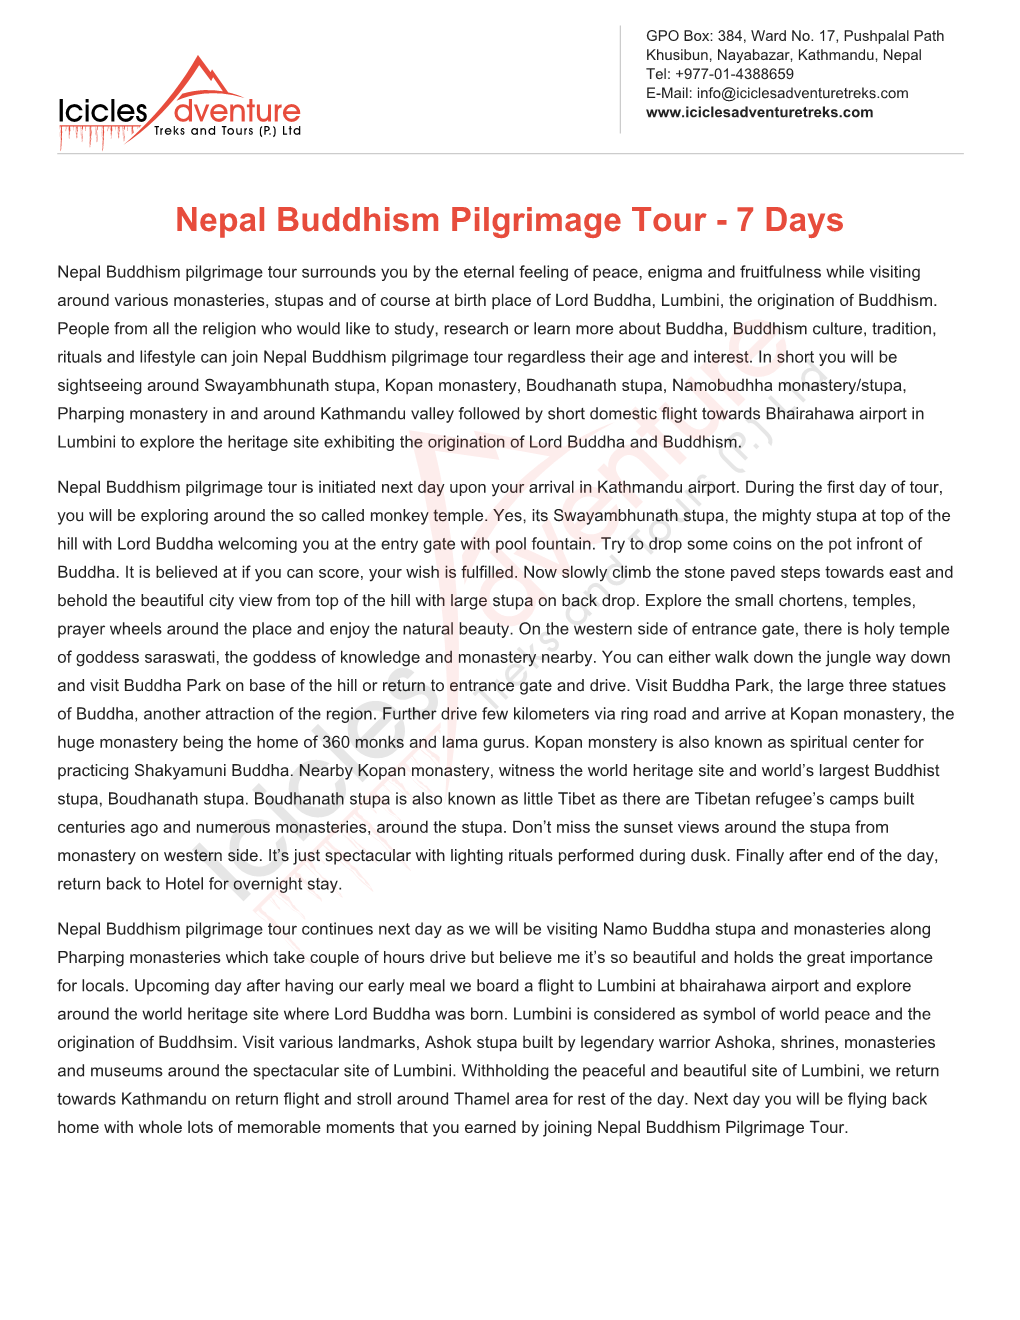 Nepal Buddhism Pilgrimage Tour - 7 Days